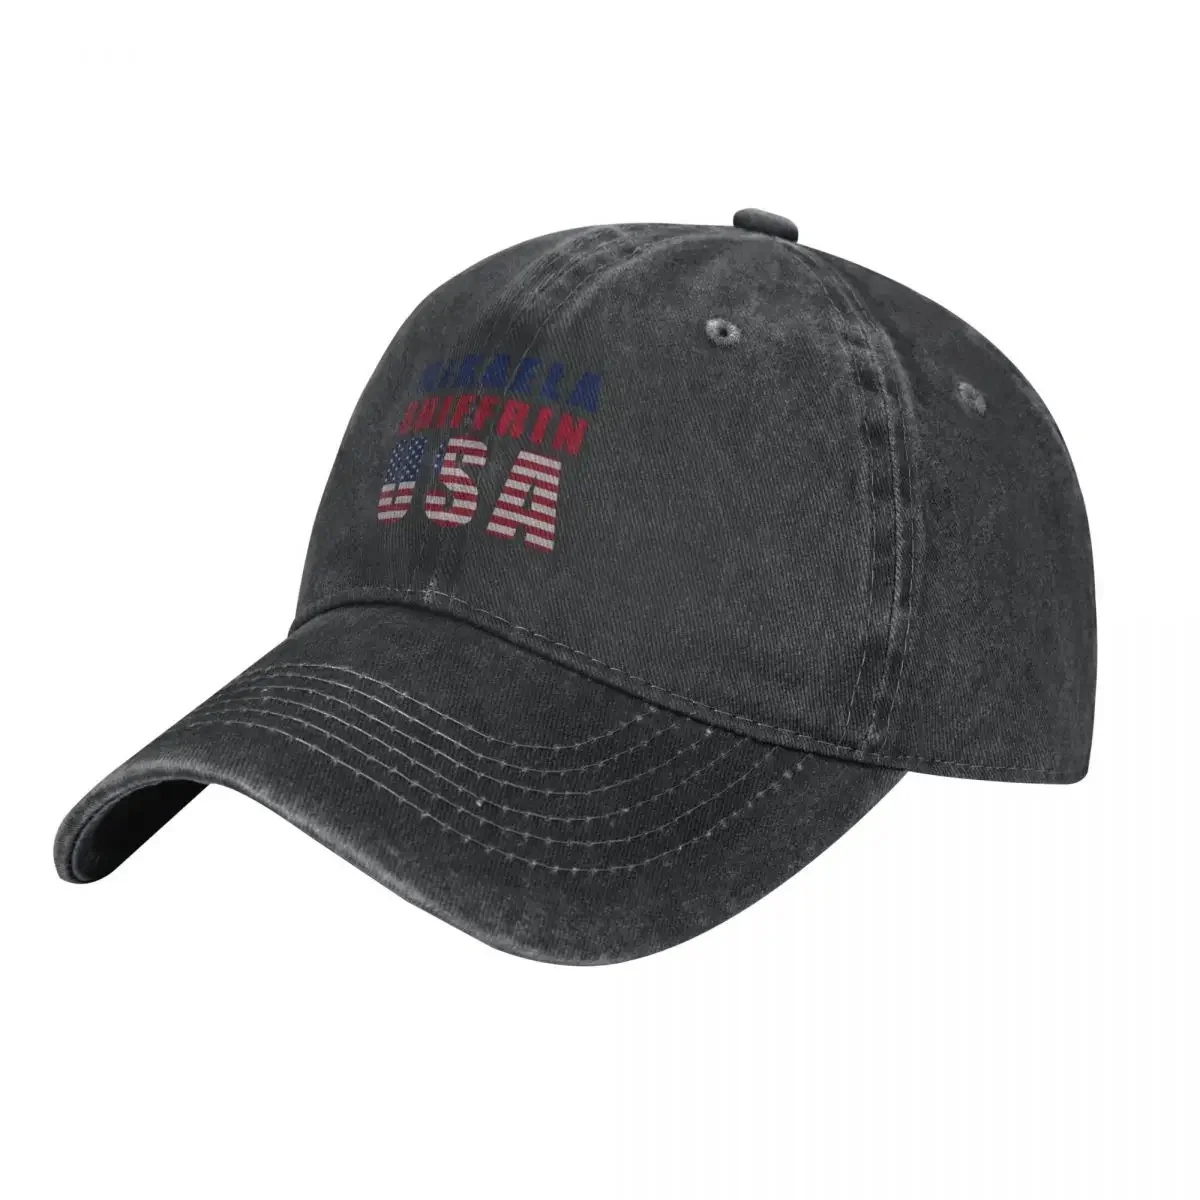 

Mikaela Shiffrin USA Cowboy Hat hard hat Snapback Cap Military Tactical Cap For Men Women's